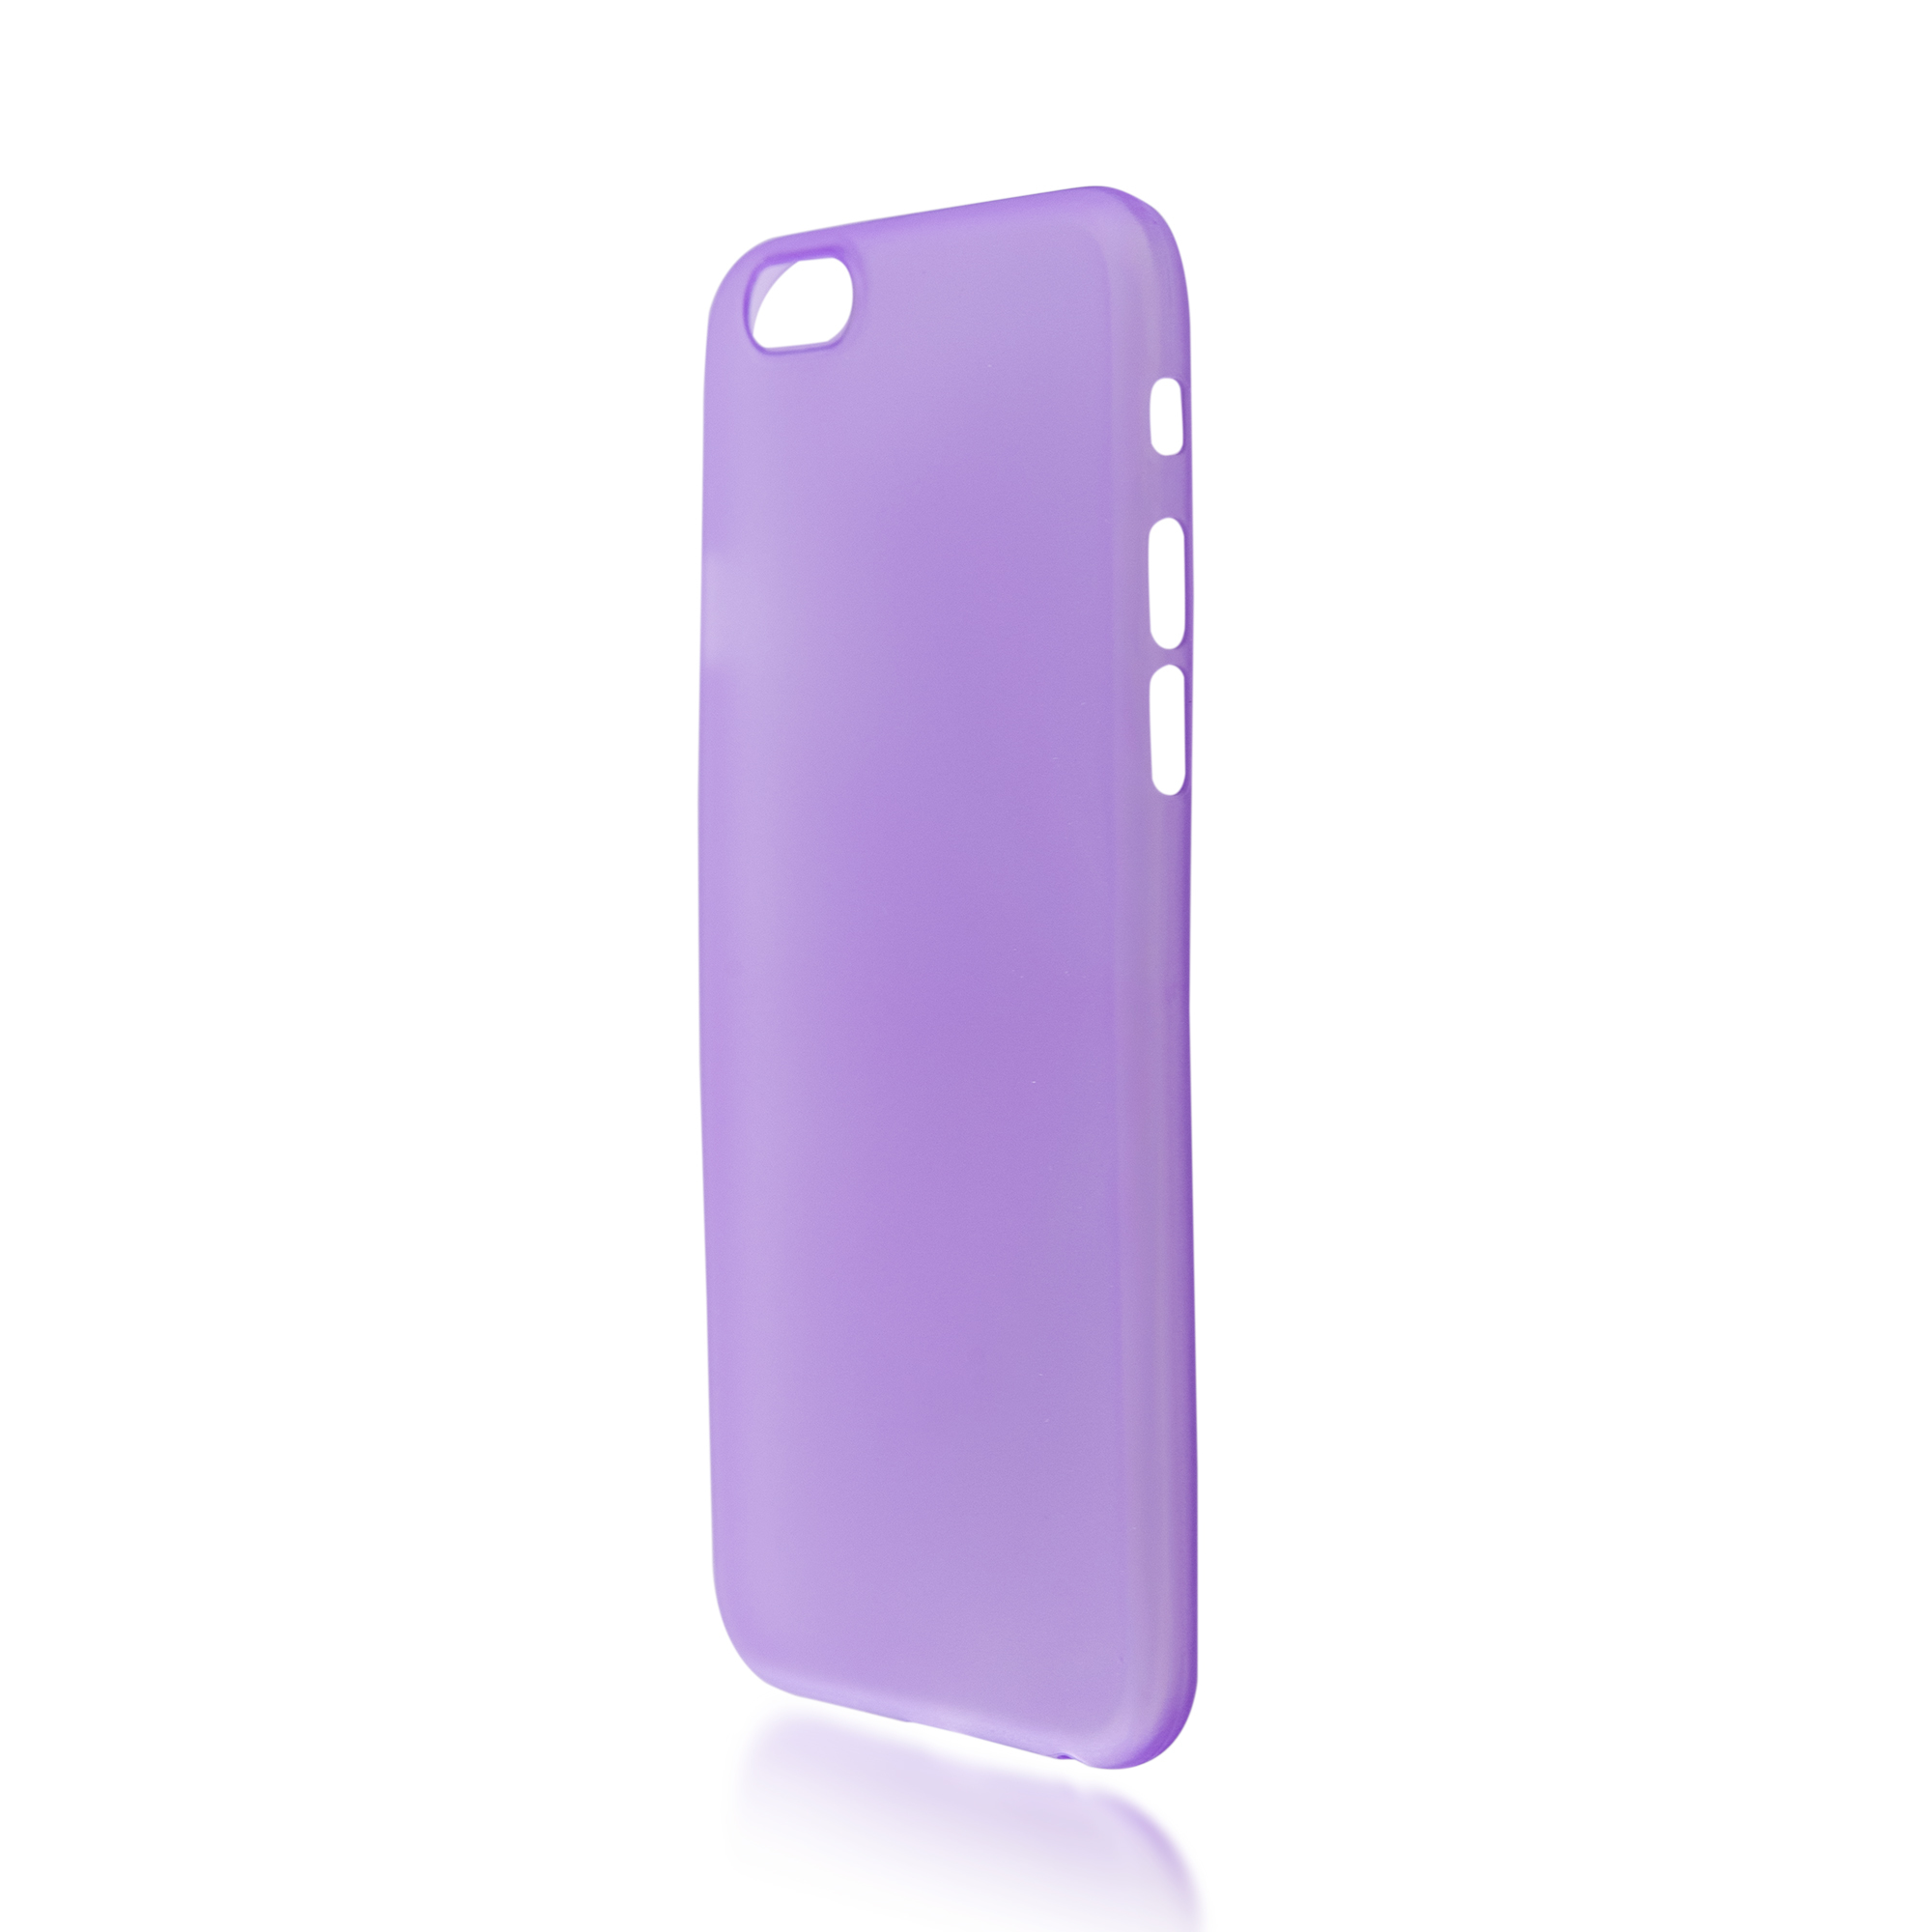 Чехол-накладка BROSCO SuperSlim для смартфона Apple iPhone 6, пластик, фиолетовый (IP6-PP-SUPERSLIM-PURPLE)